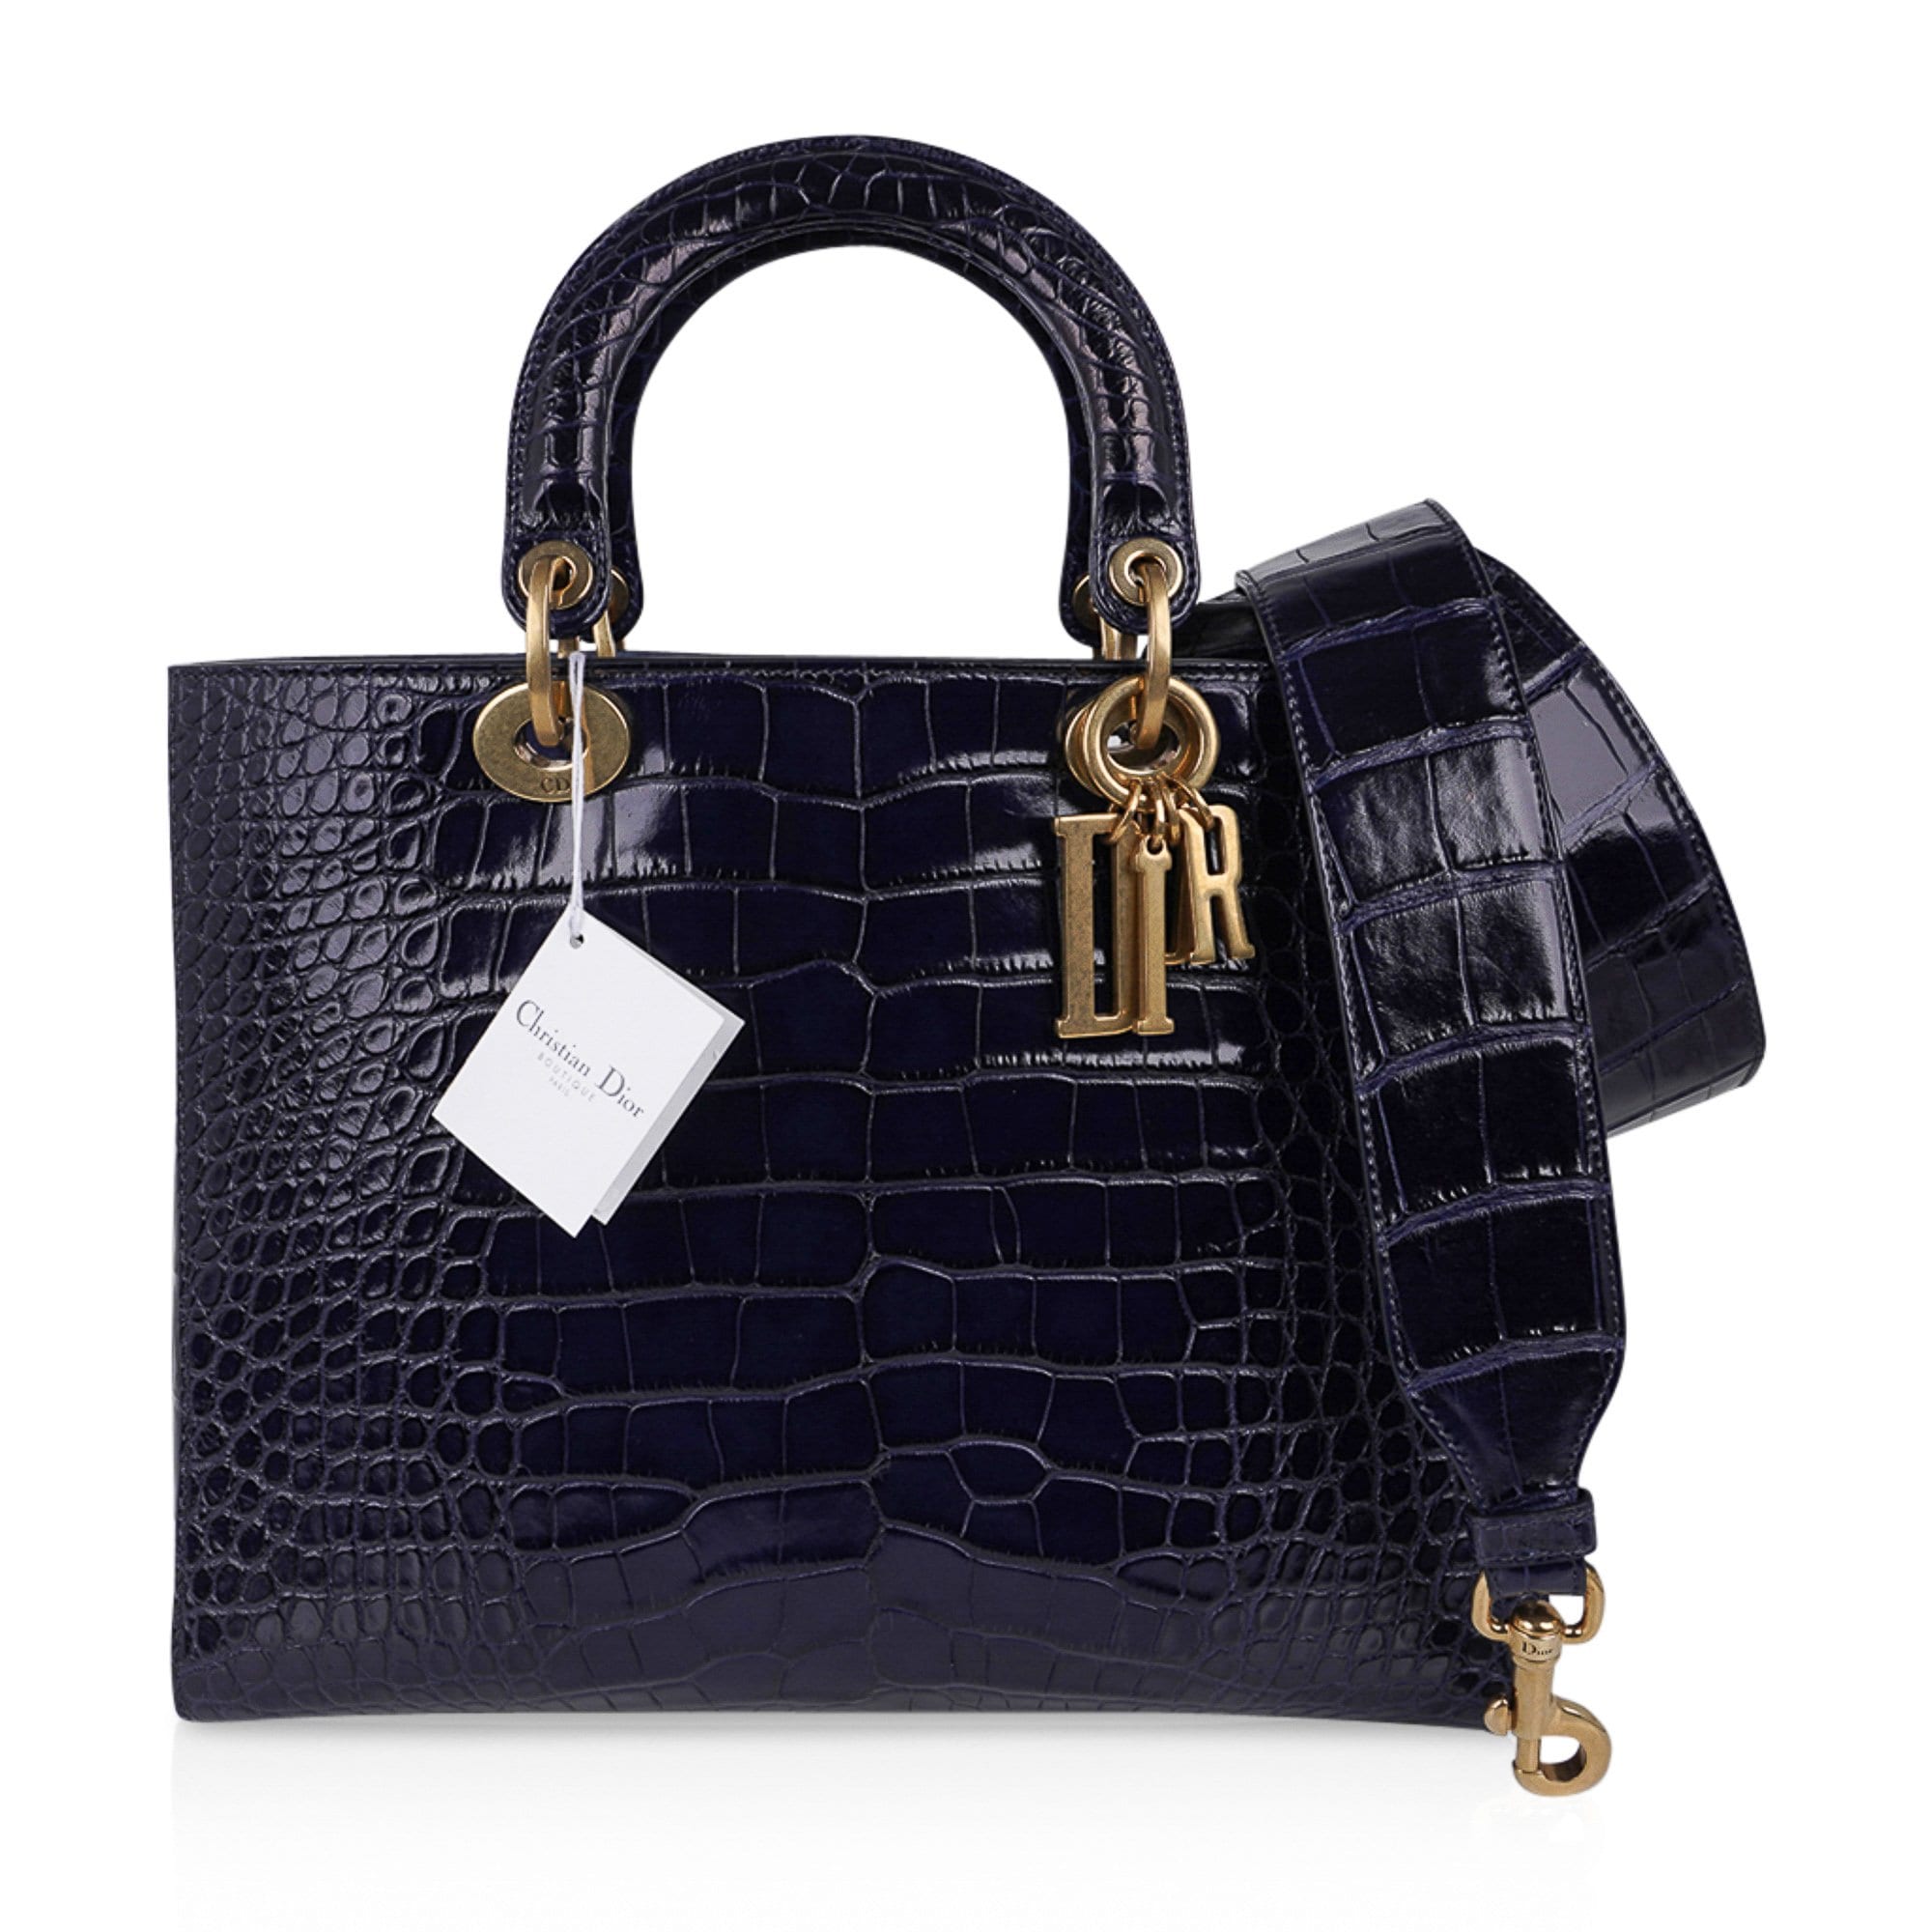 Christian Dior Lady Dior Womens Handbags